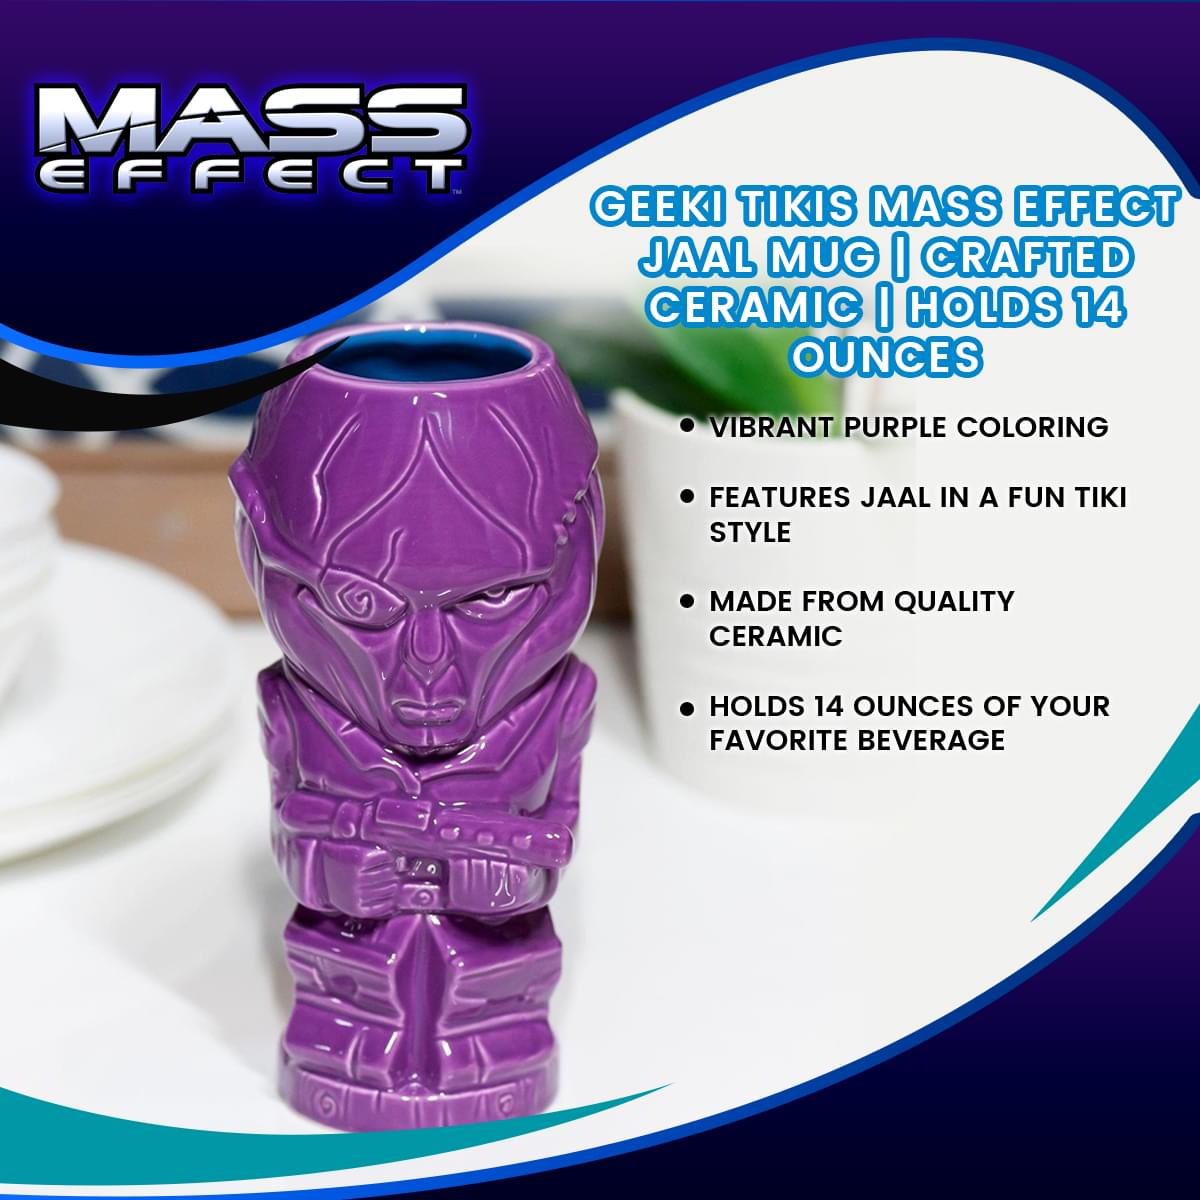 Geeki Tikis Mass Effect Jaal Mug | Crafted Ceramic | Holds 14 Ounces